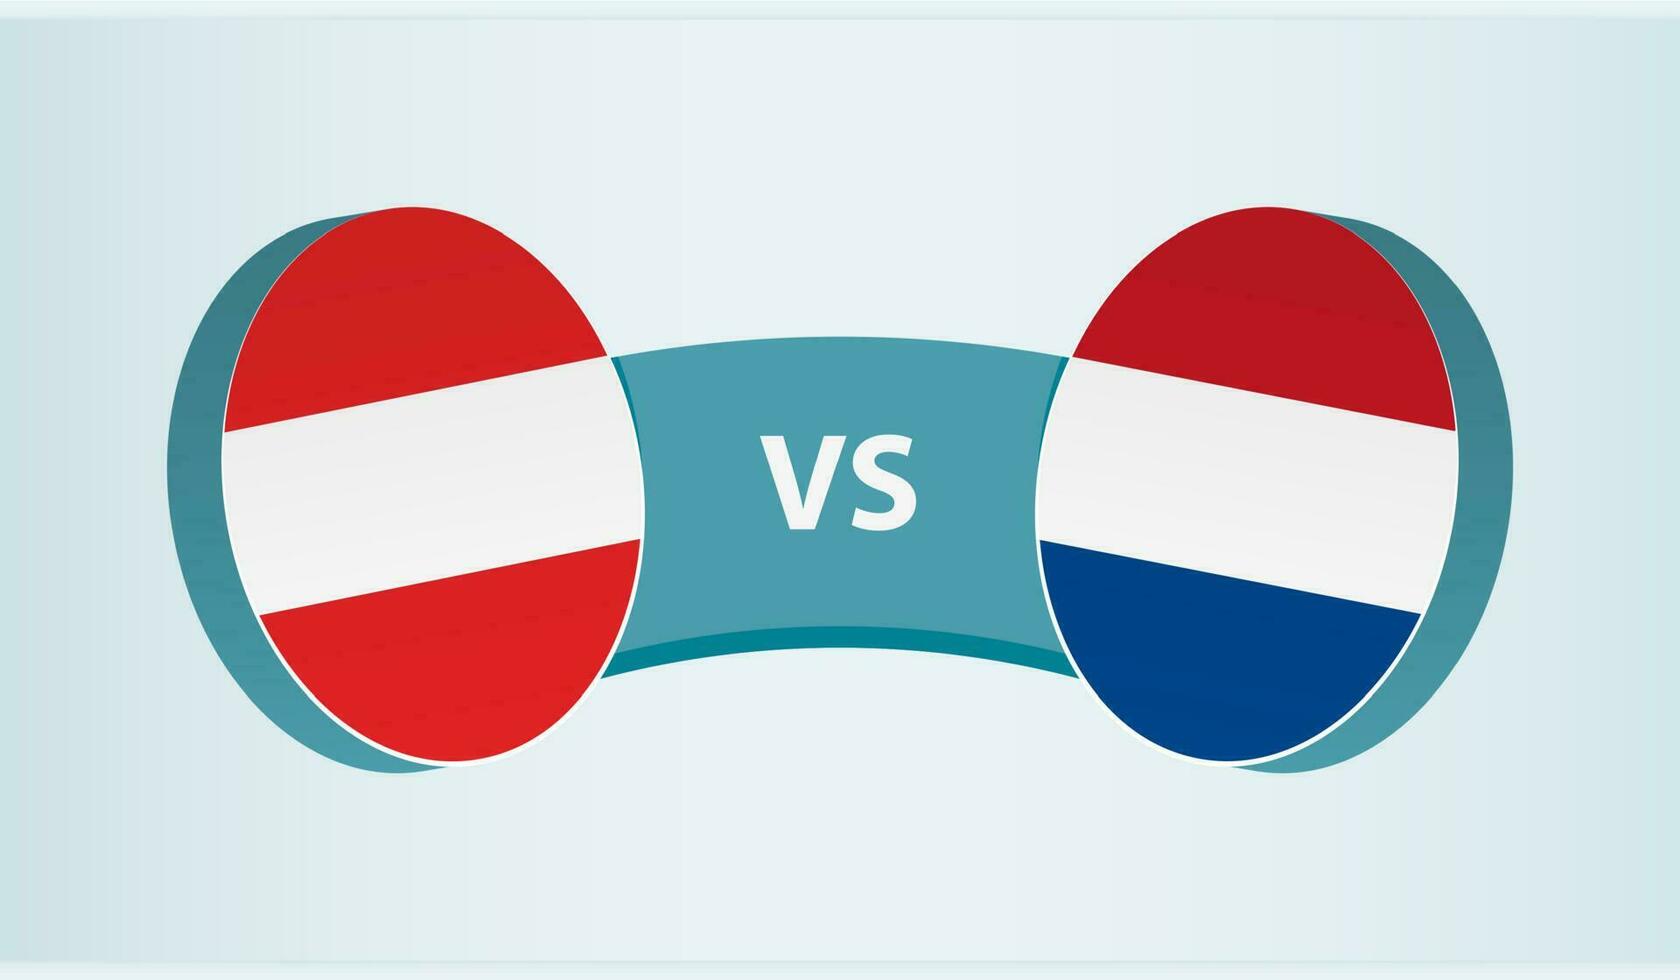 Austria versus Netherlands, team sports competition concept. vector